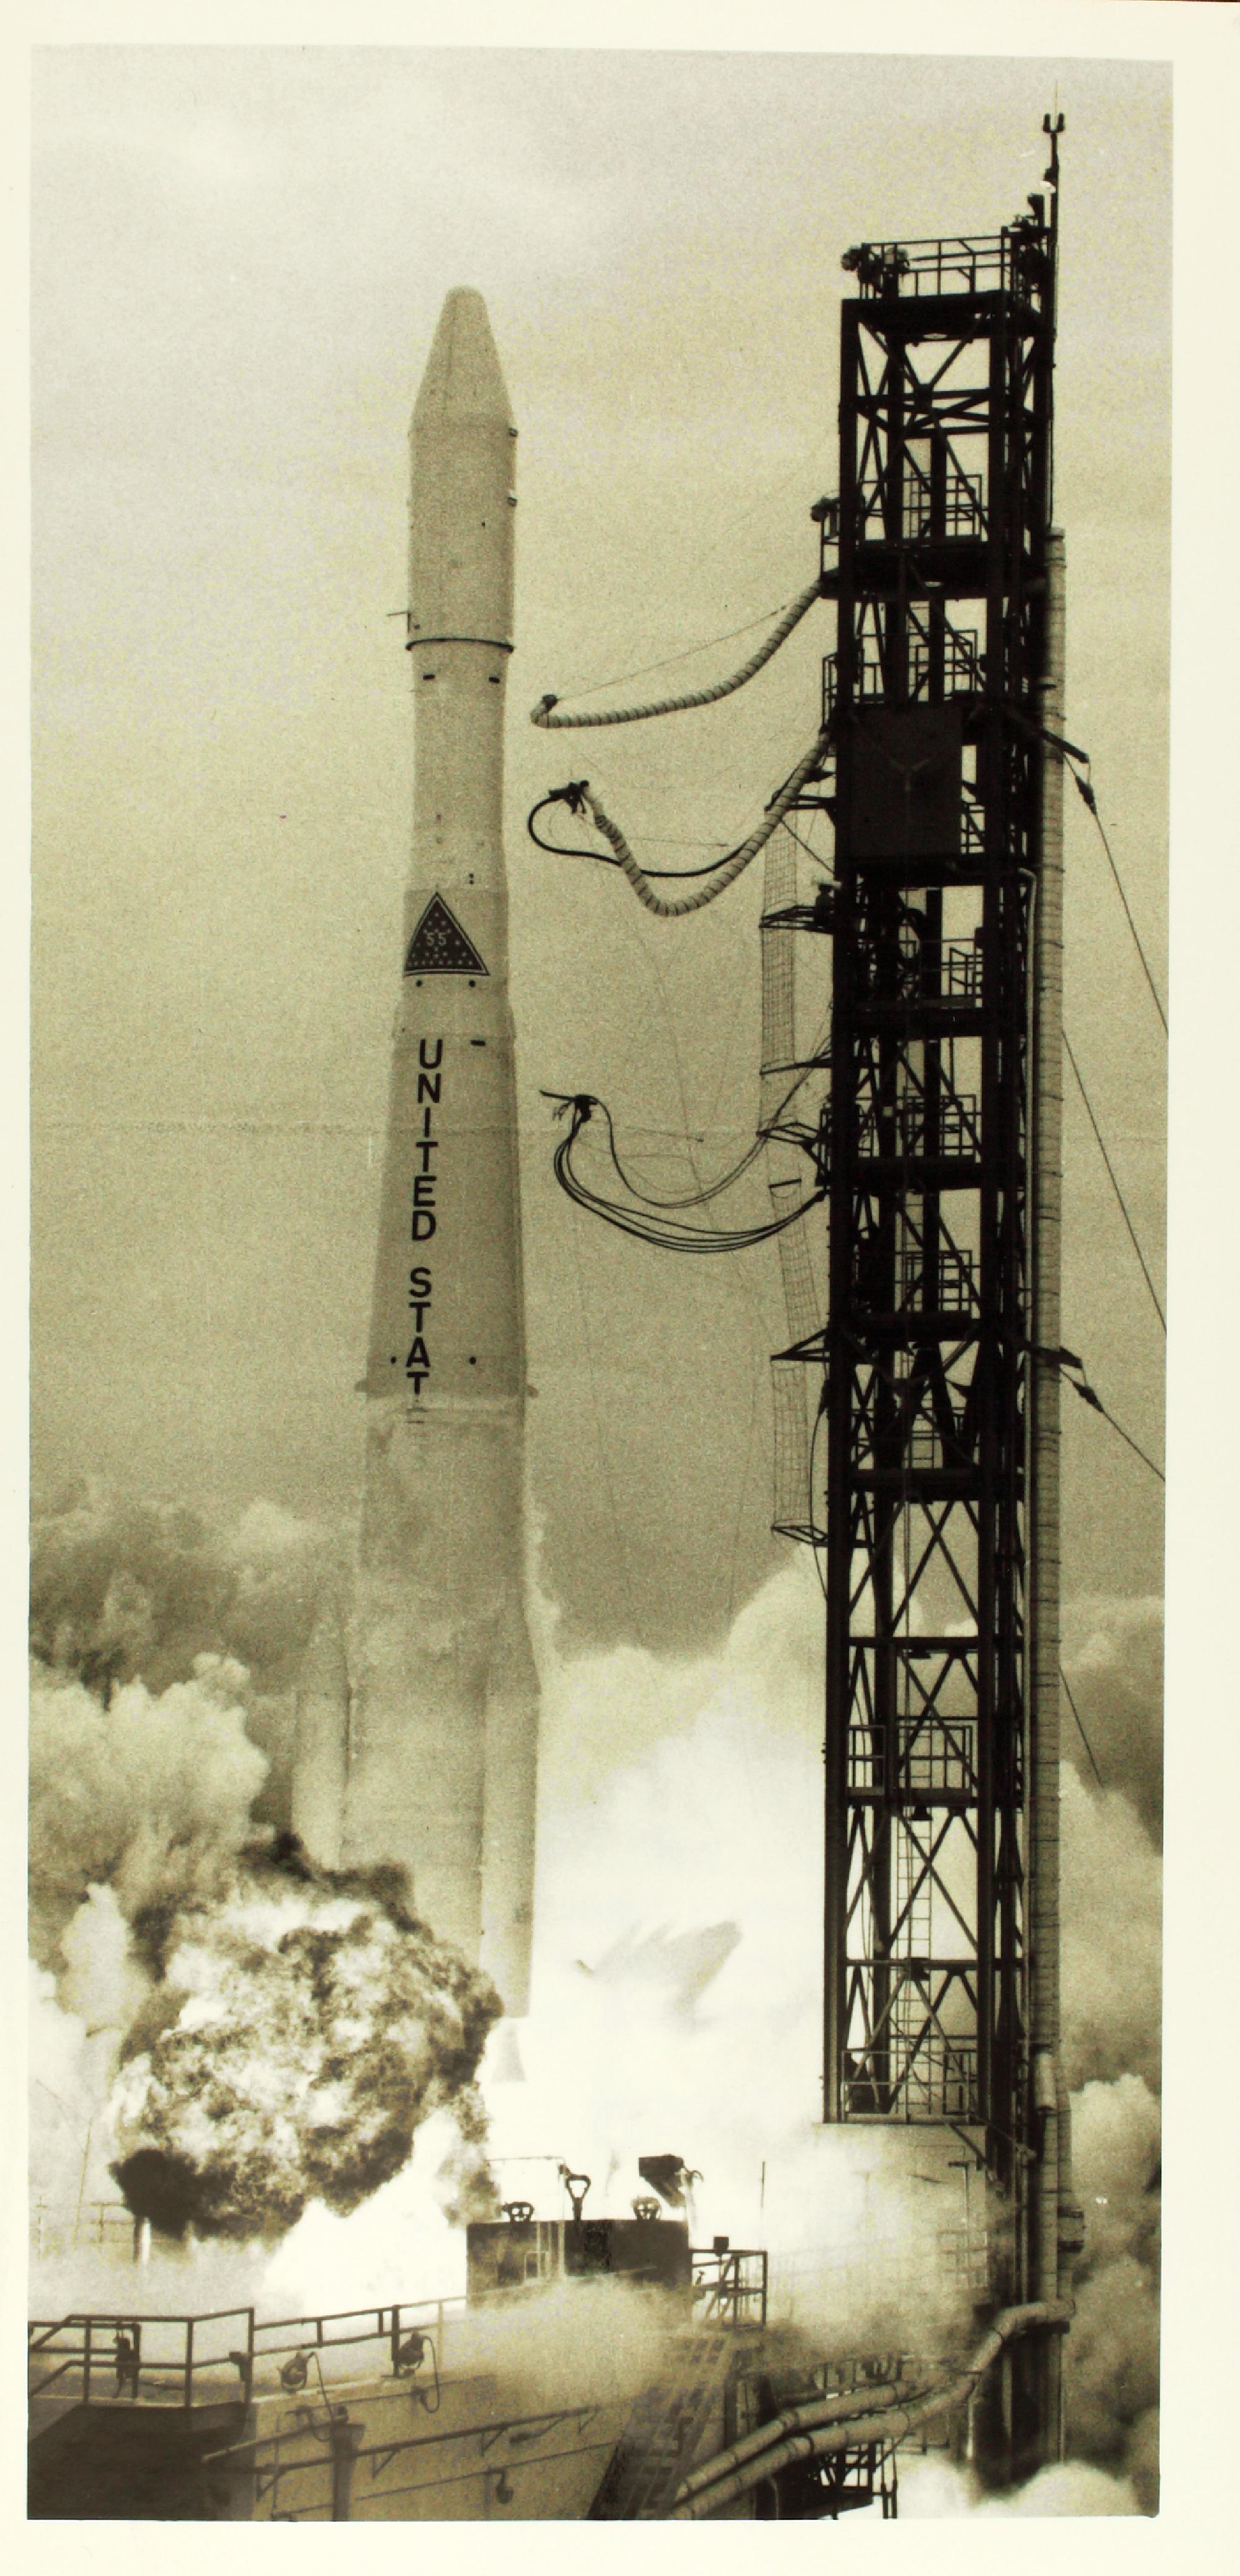 Delta 55 launch